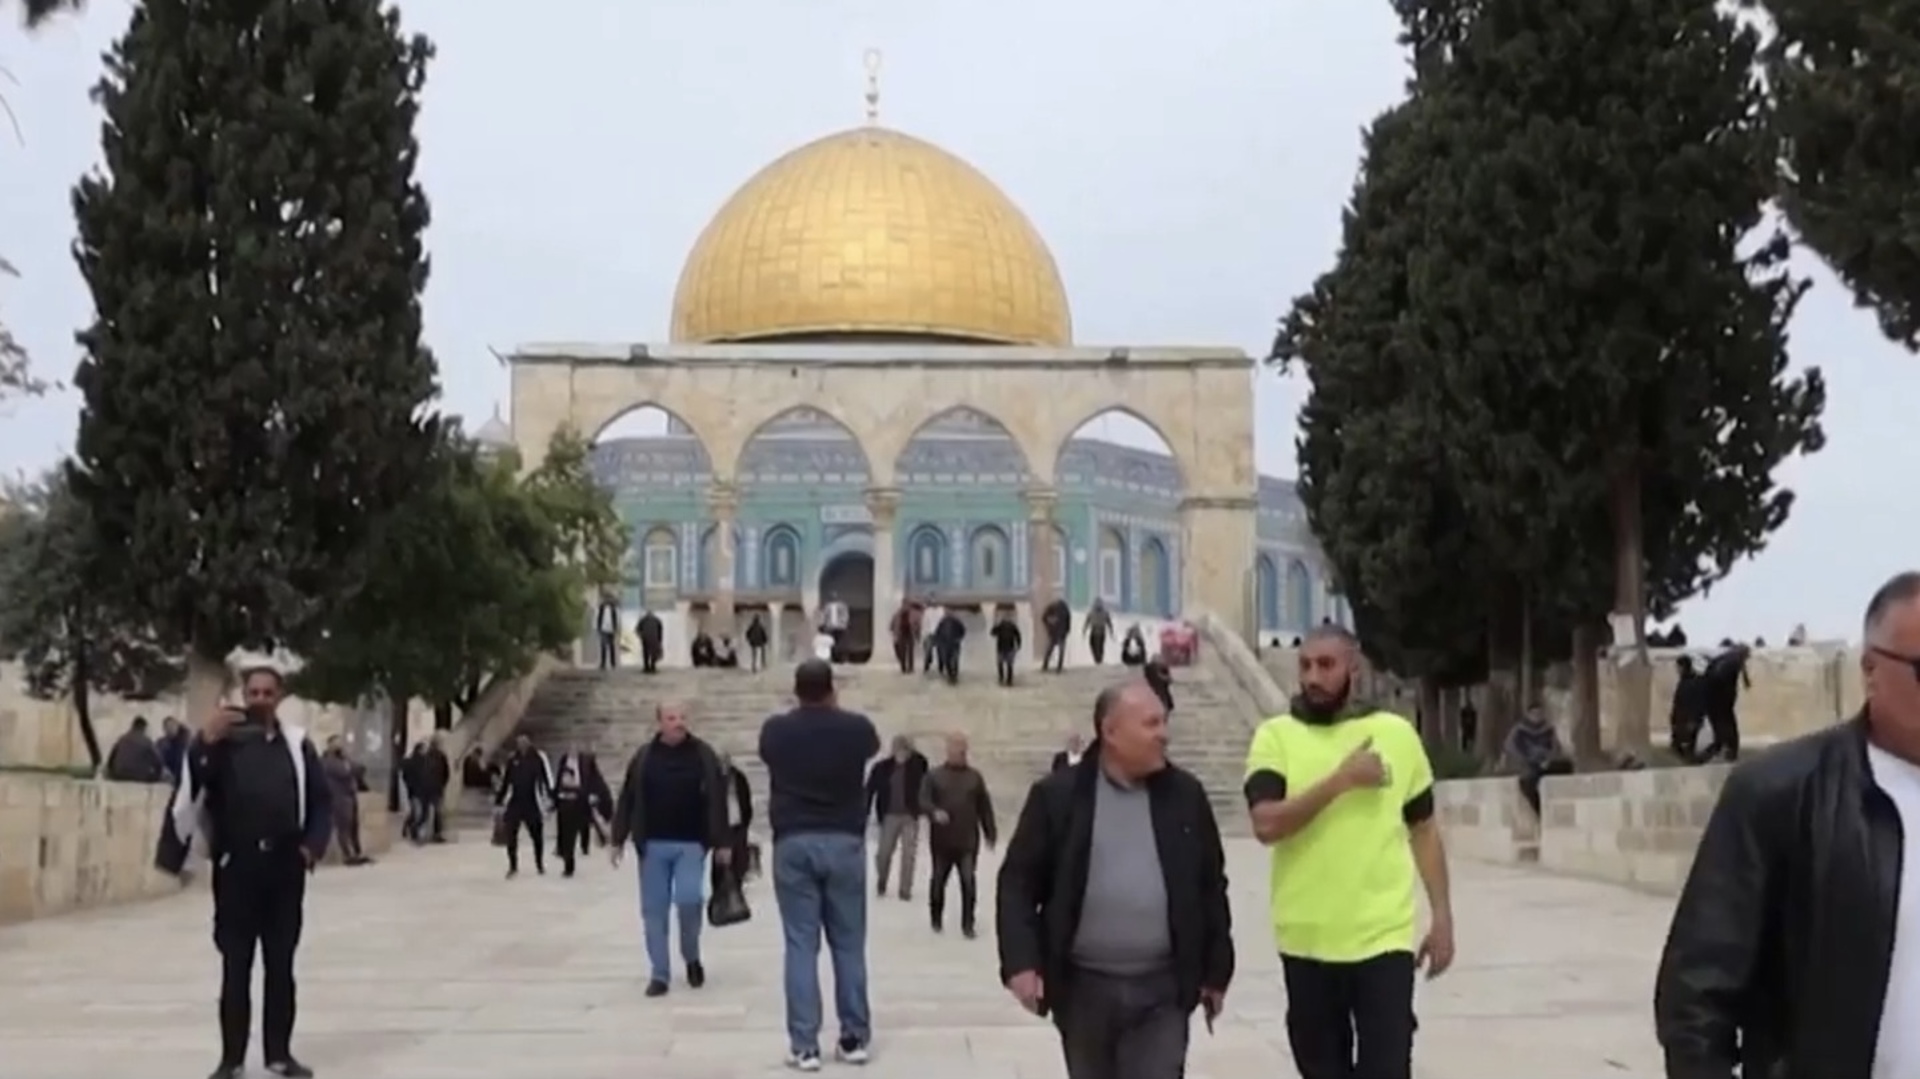 Mounting security concerns for Al-Aqsa mosque ahead of Ramadan